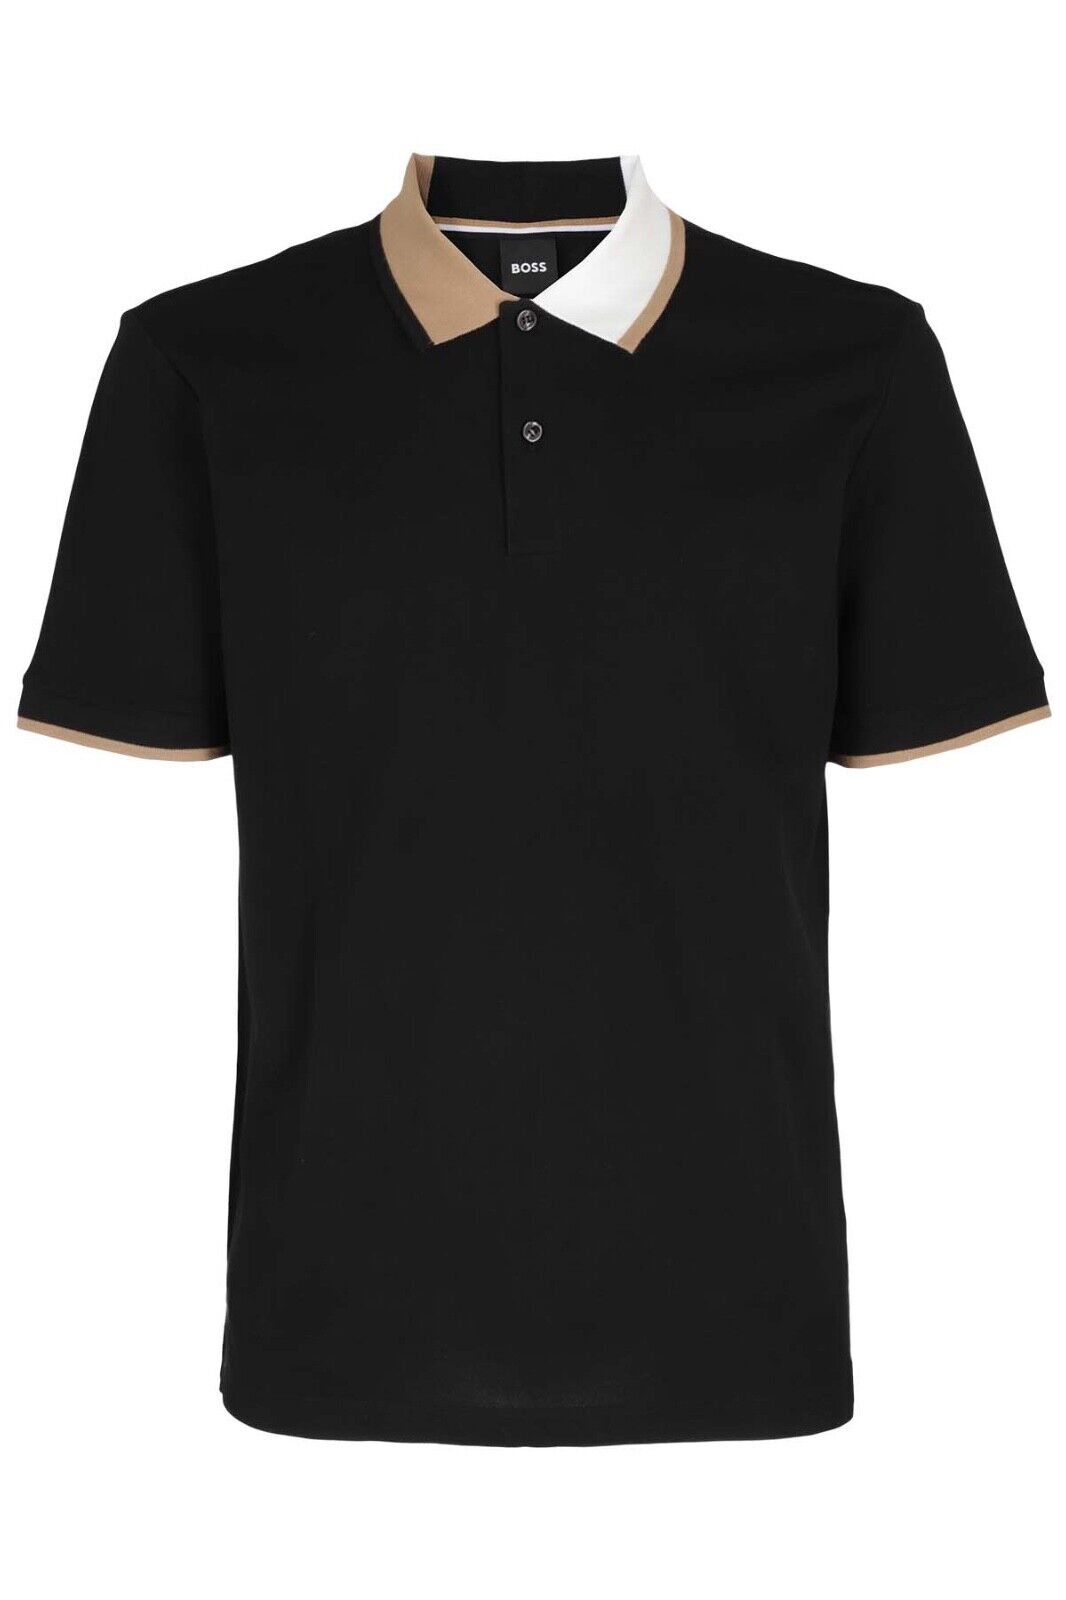 HUGO BOSS Parlay 177 Men’s Regular Fit Polo Shirt in Black 50488275 001